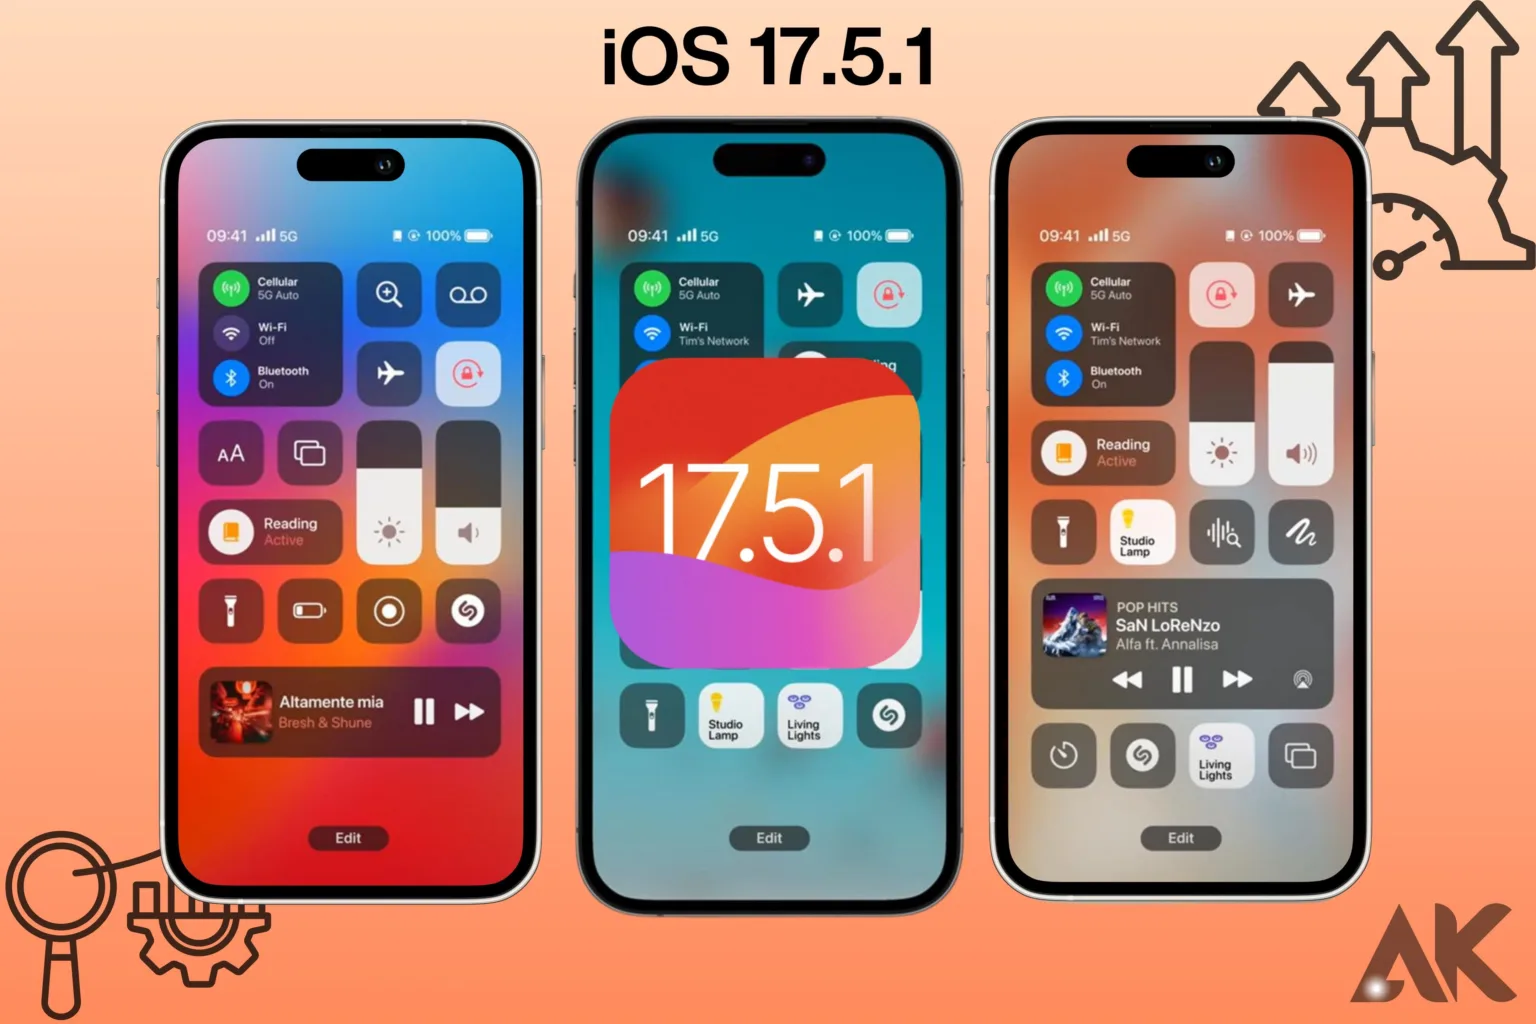 iOS 17.5.1 performance improvements